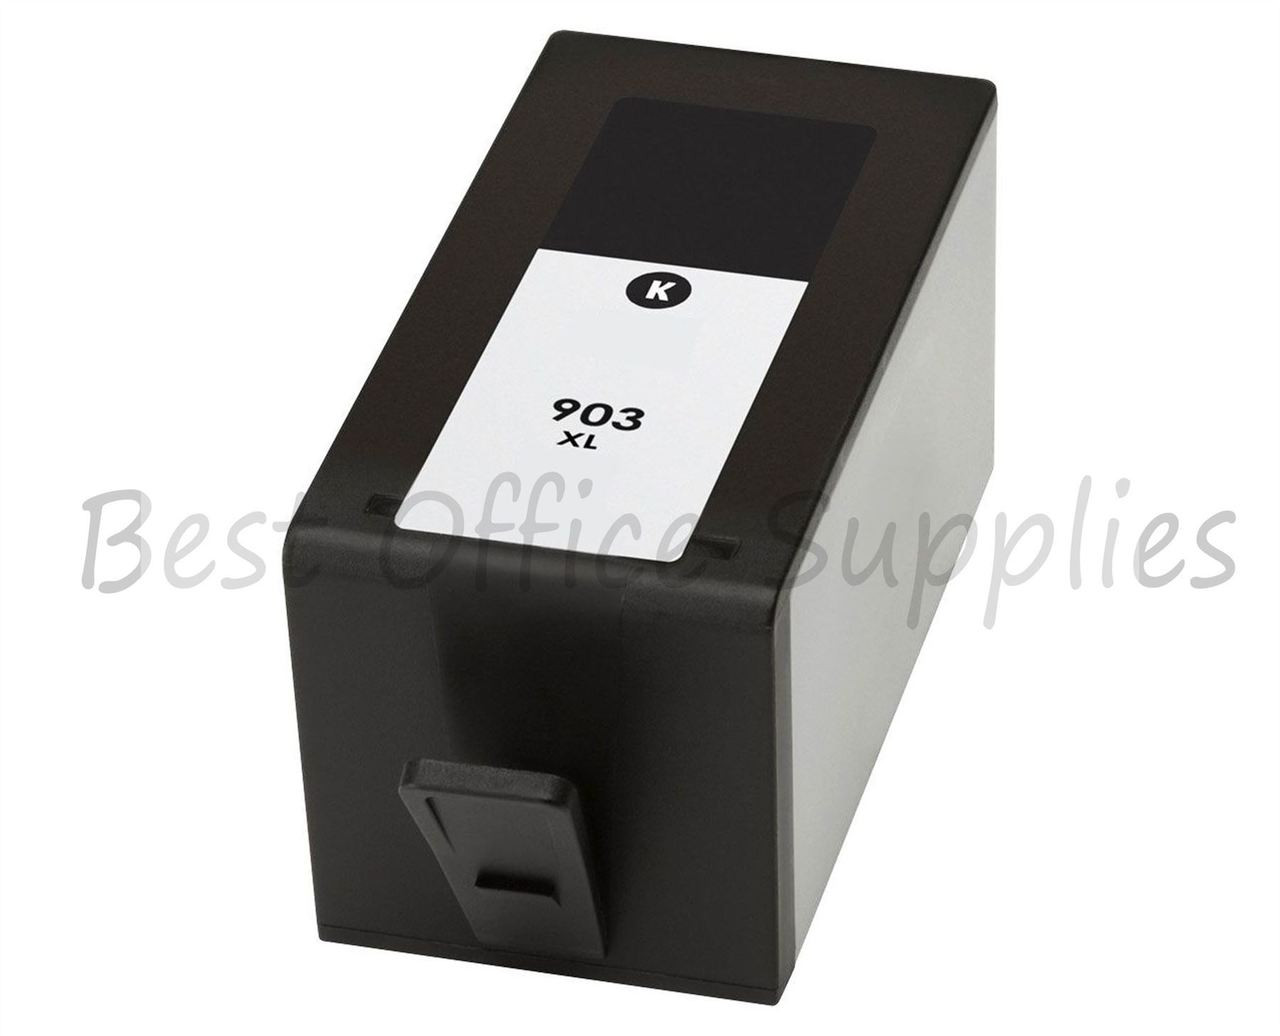 Remanufactured HP 903 XL Black Ink Cartridge